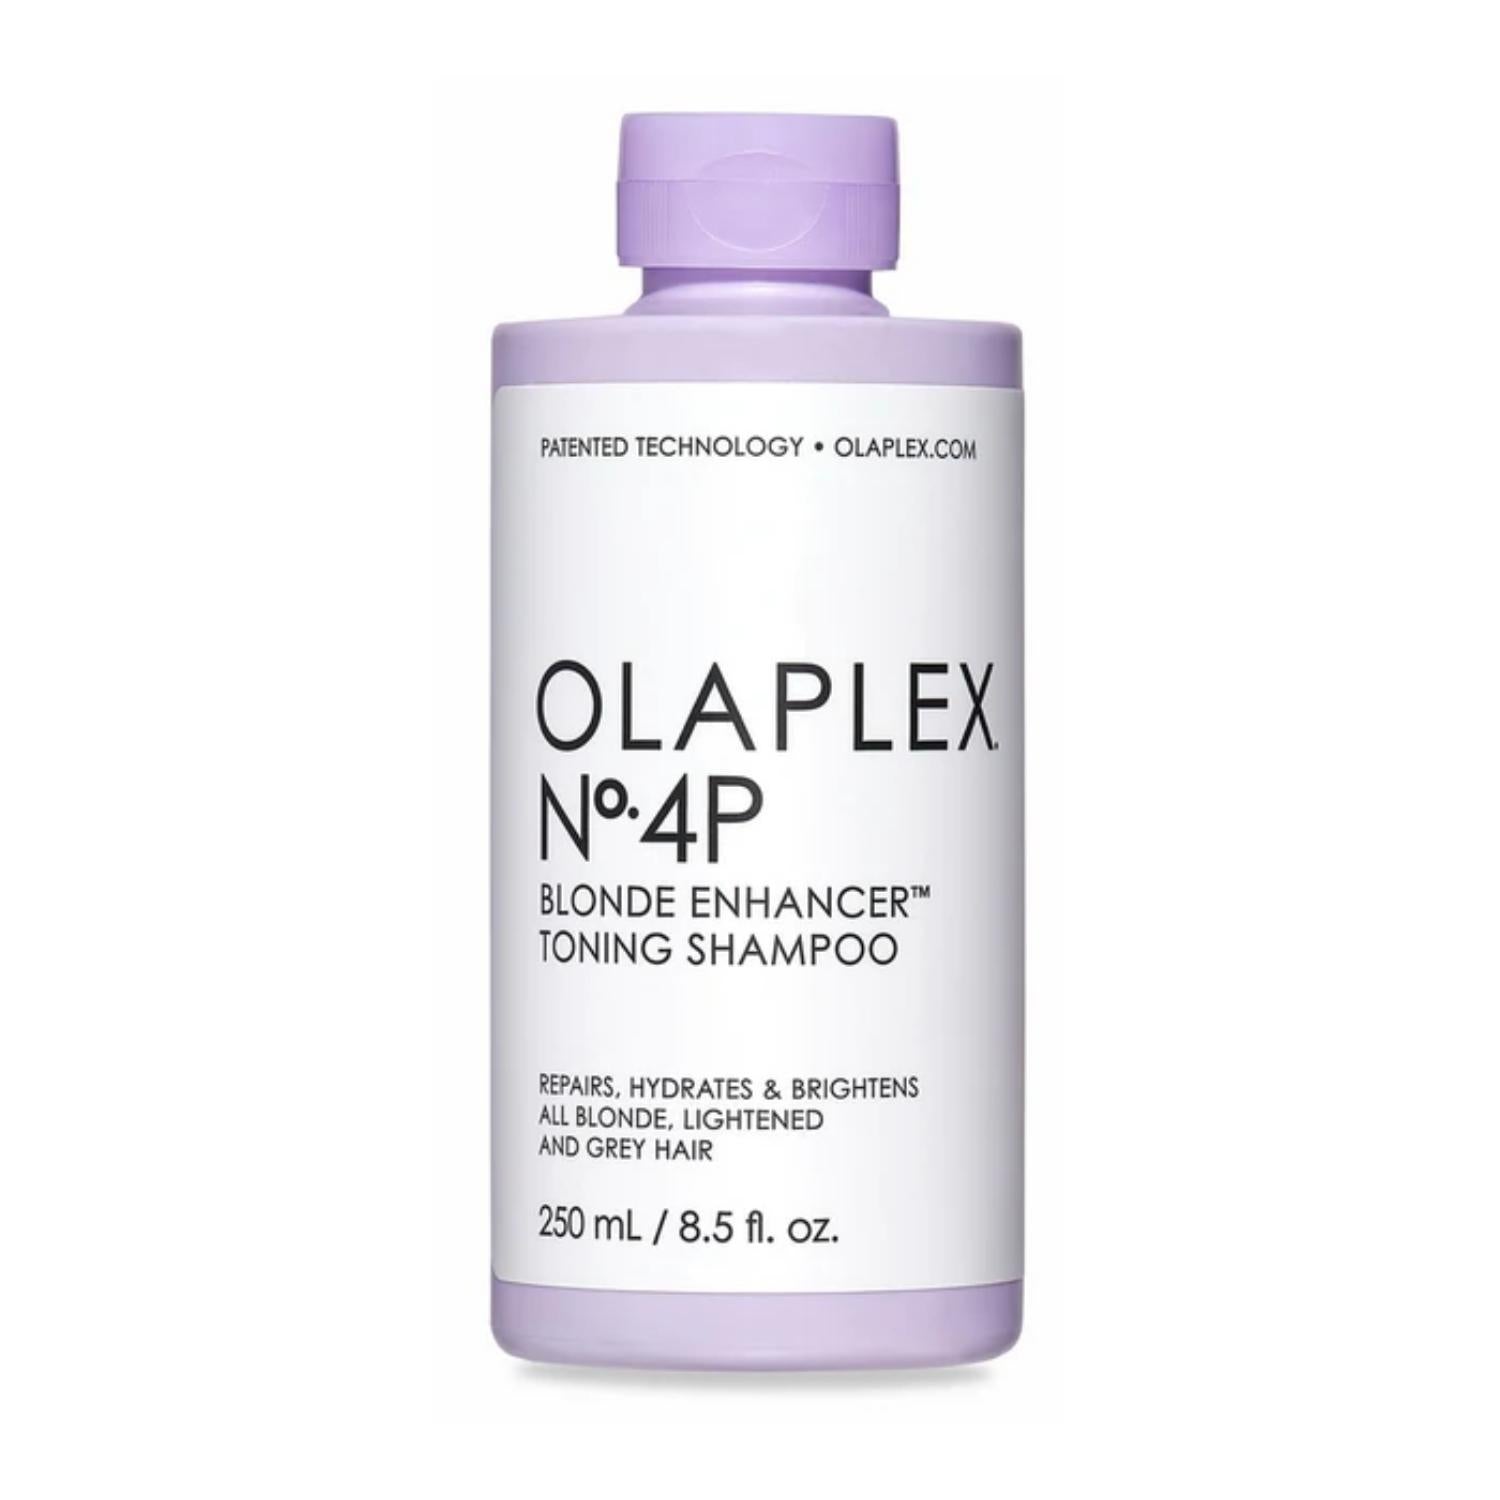 Olaplex No 4P Blonde Enhancer Toning Shampoo 250ml 1 Shaws Department Stores